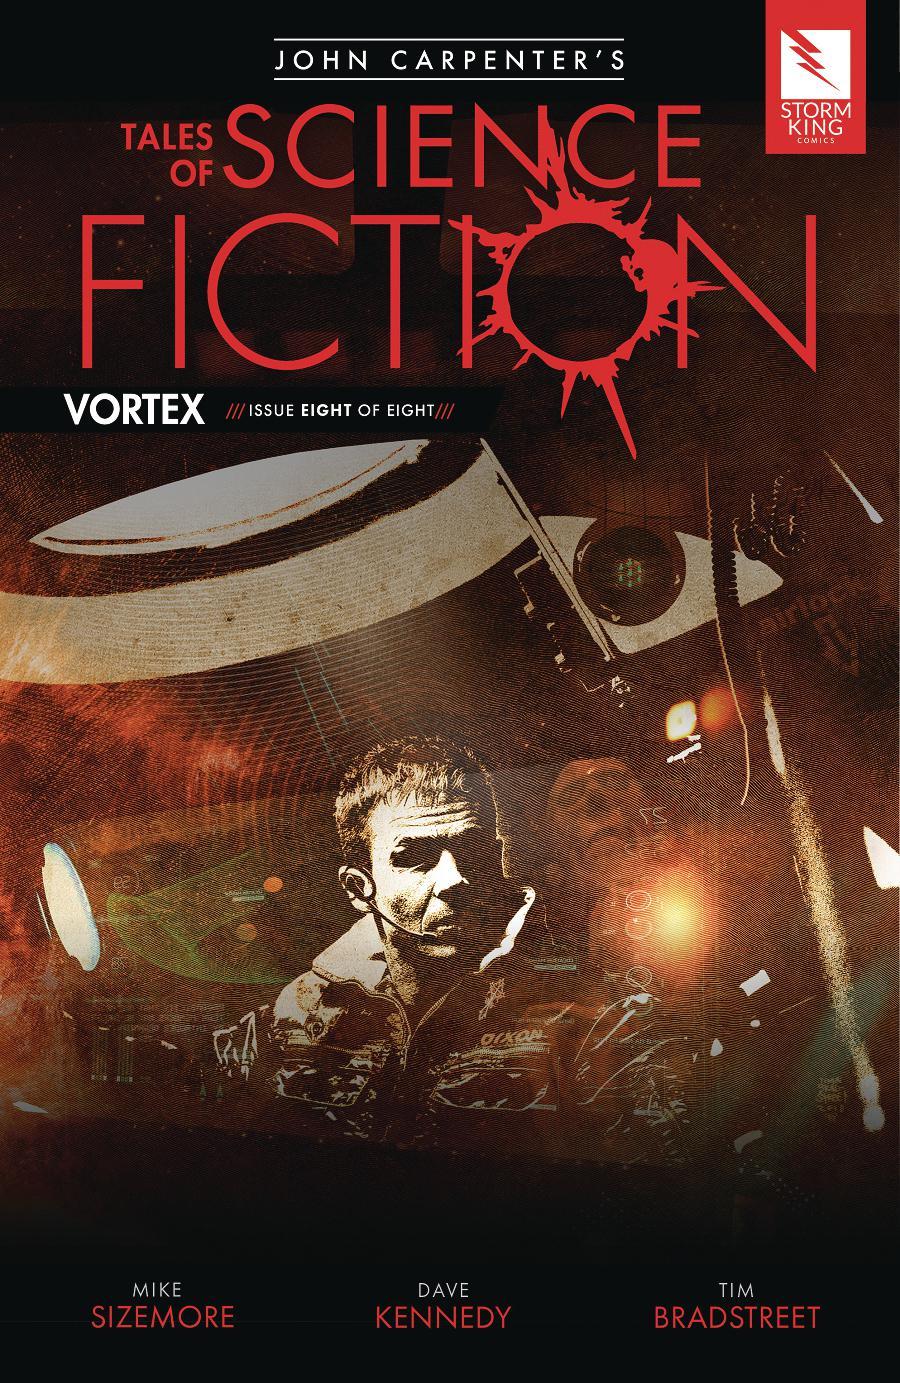 John Carpenters Tales Of Science Fiction Vortex Vol. 1 #8